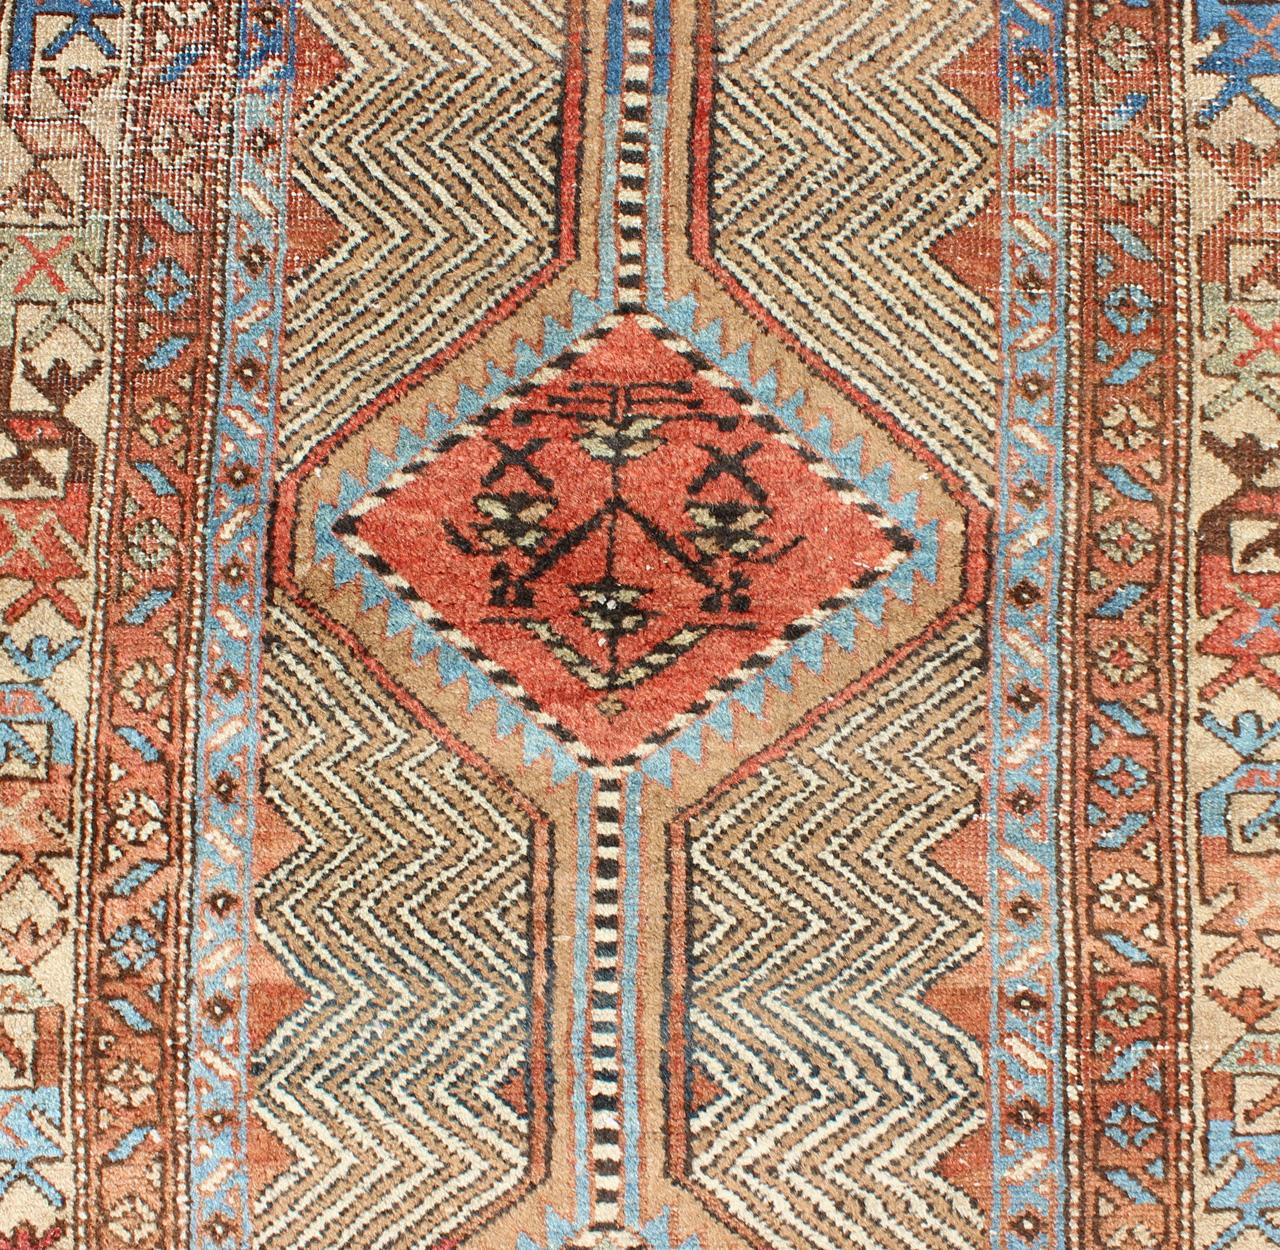 Colorful Antique Persian Serab Gallery Rug with Unique Geometric Design 3